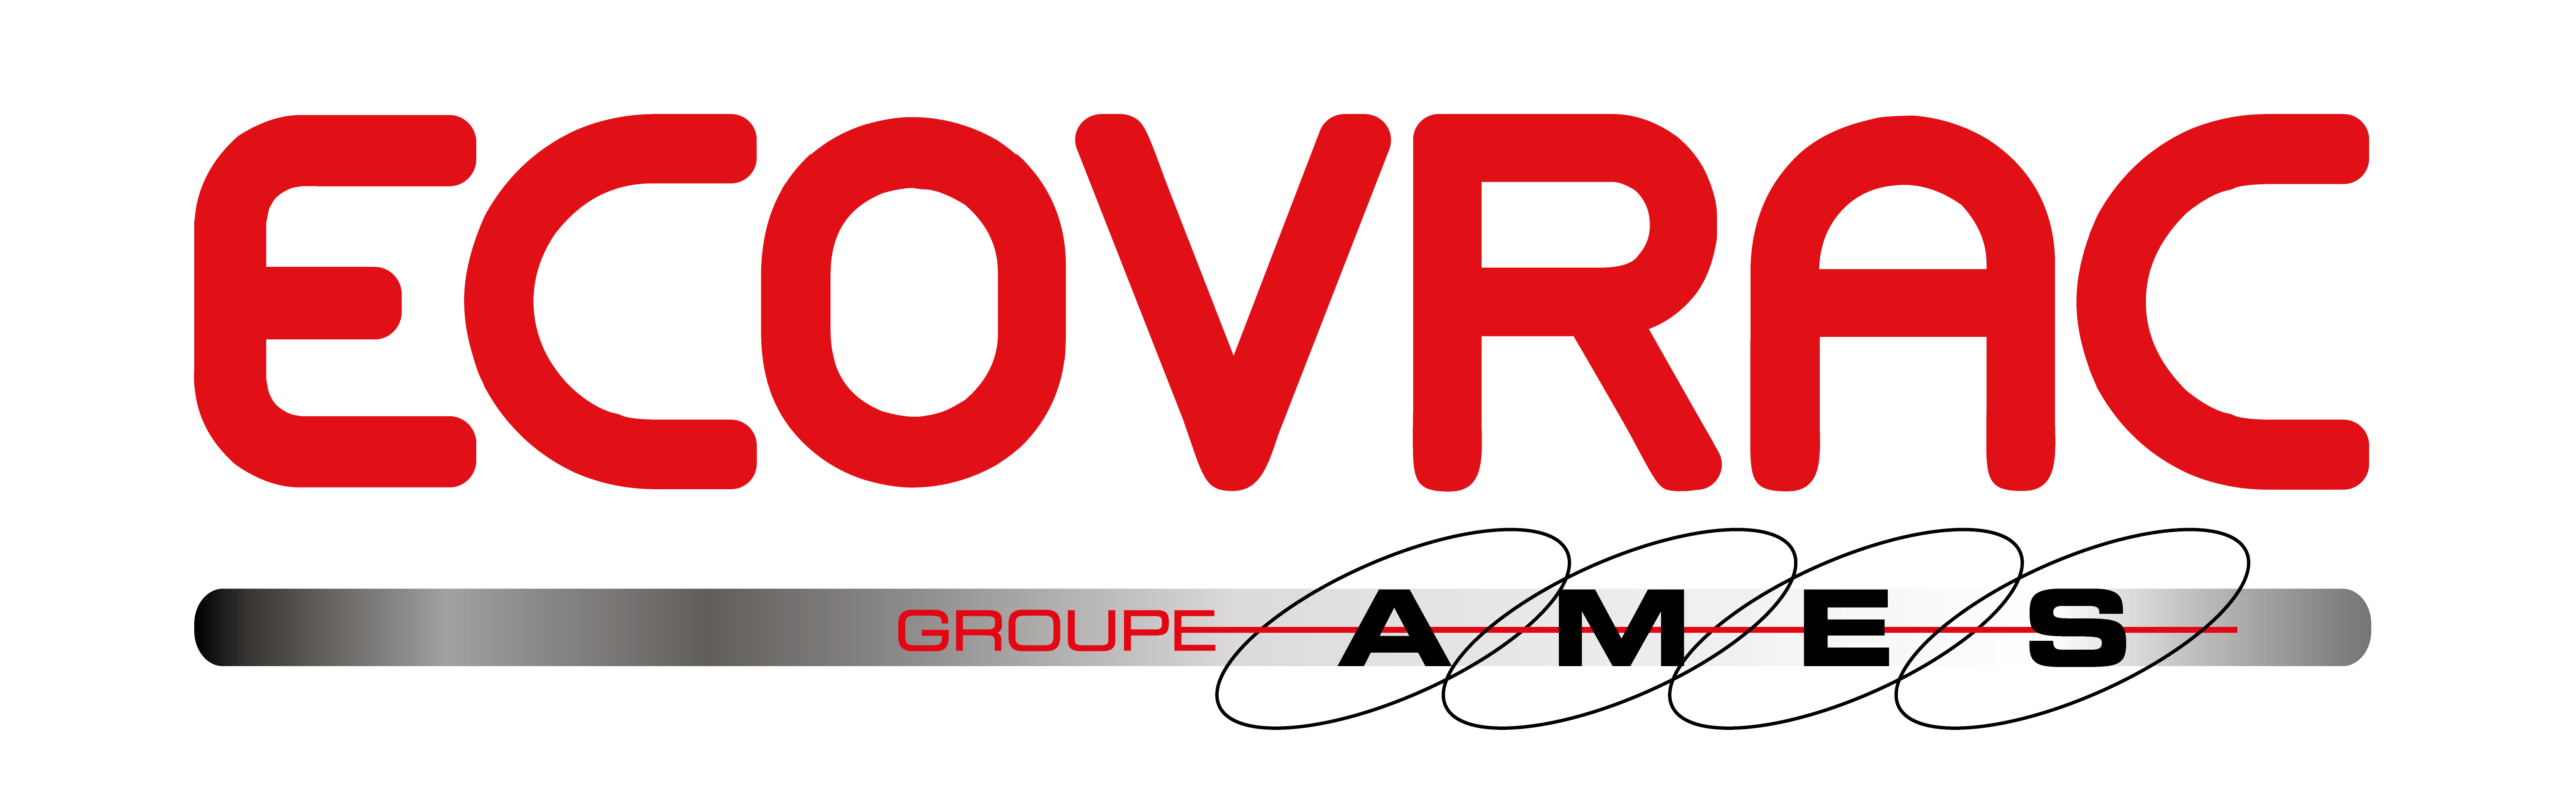 Ecovrac Logo